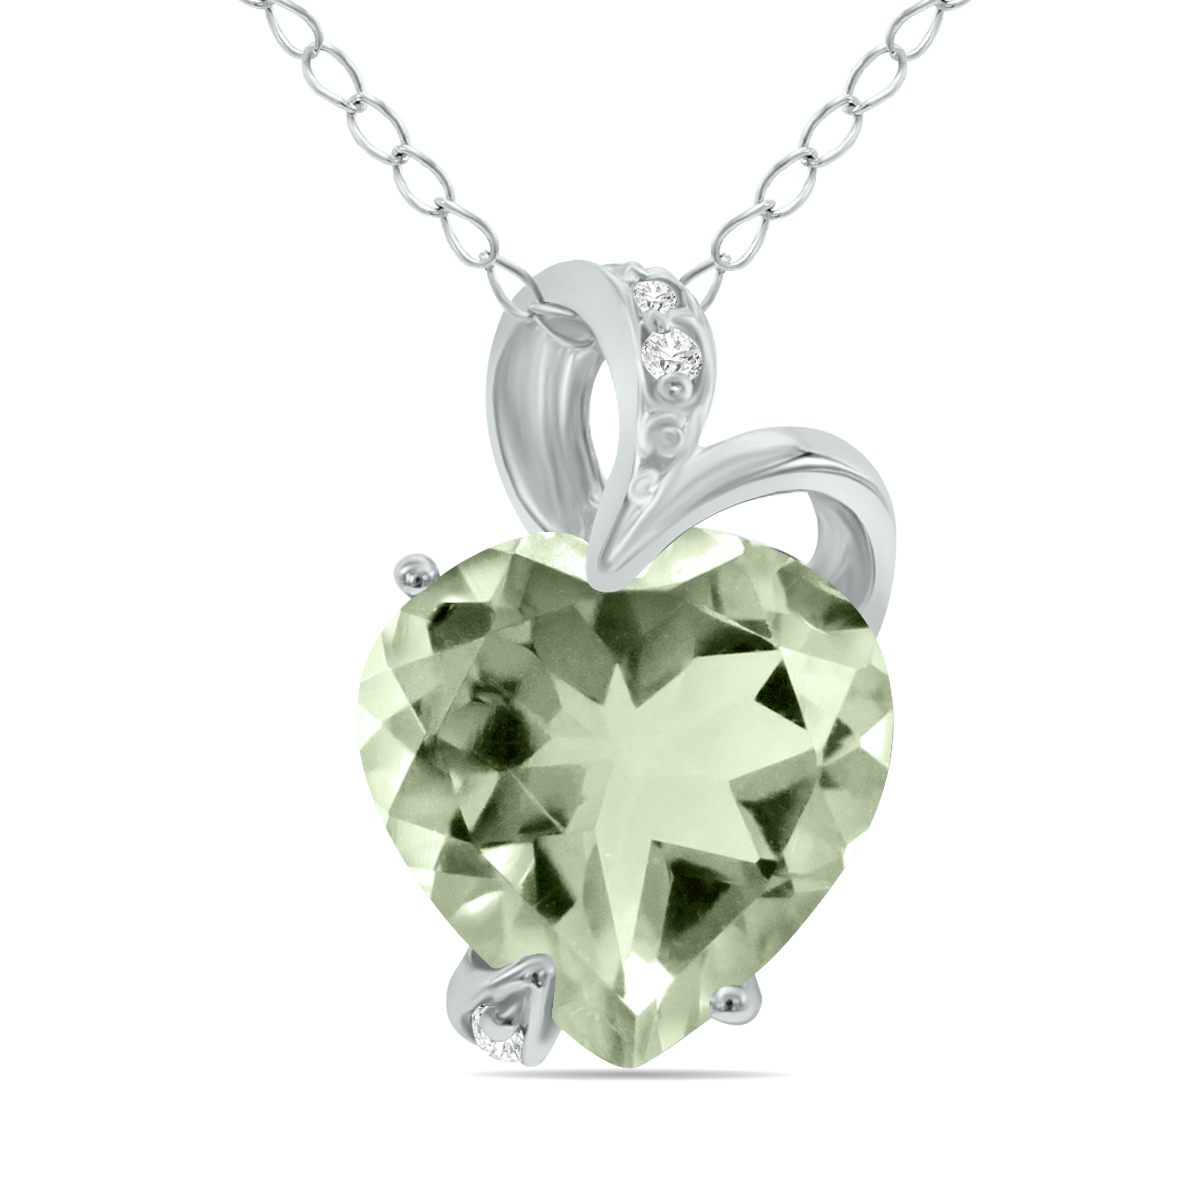 4.75 Carat Green Amethyst Heart and Diamond Pendant in 14K White Gold